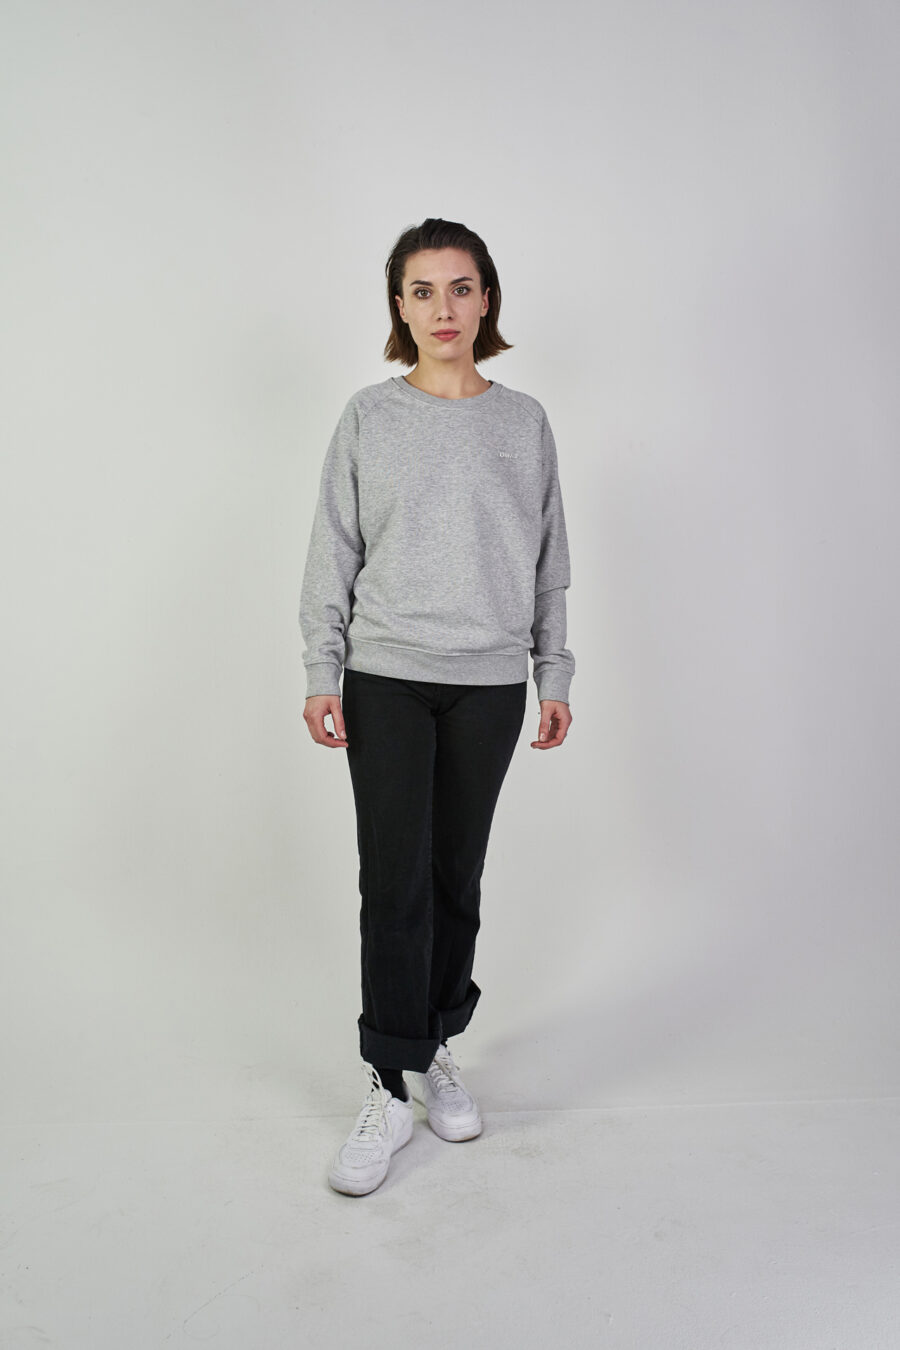 label.sweater grau-weiß